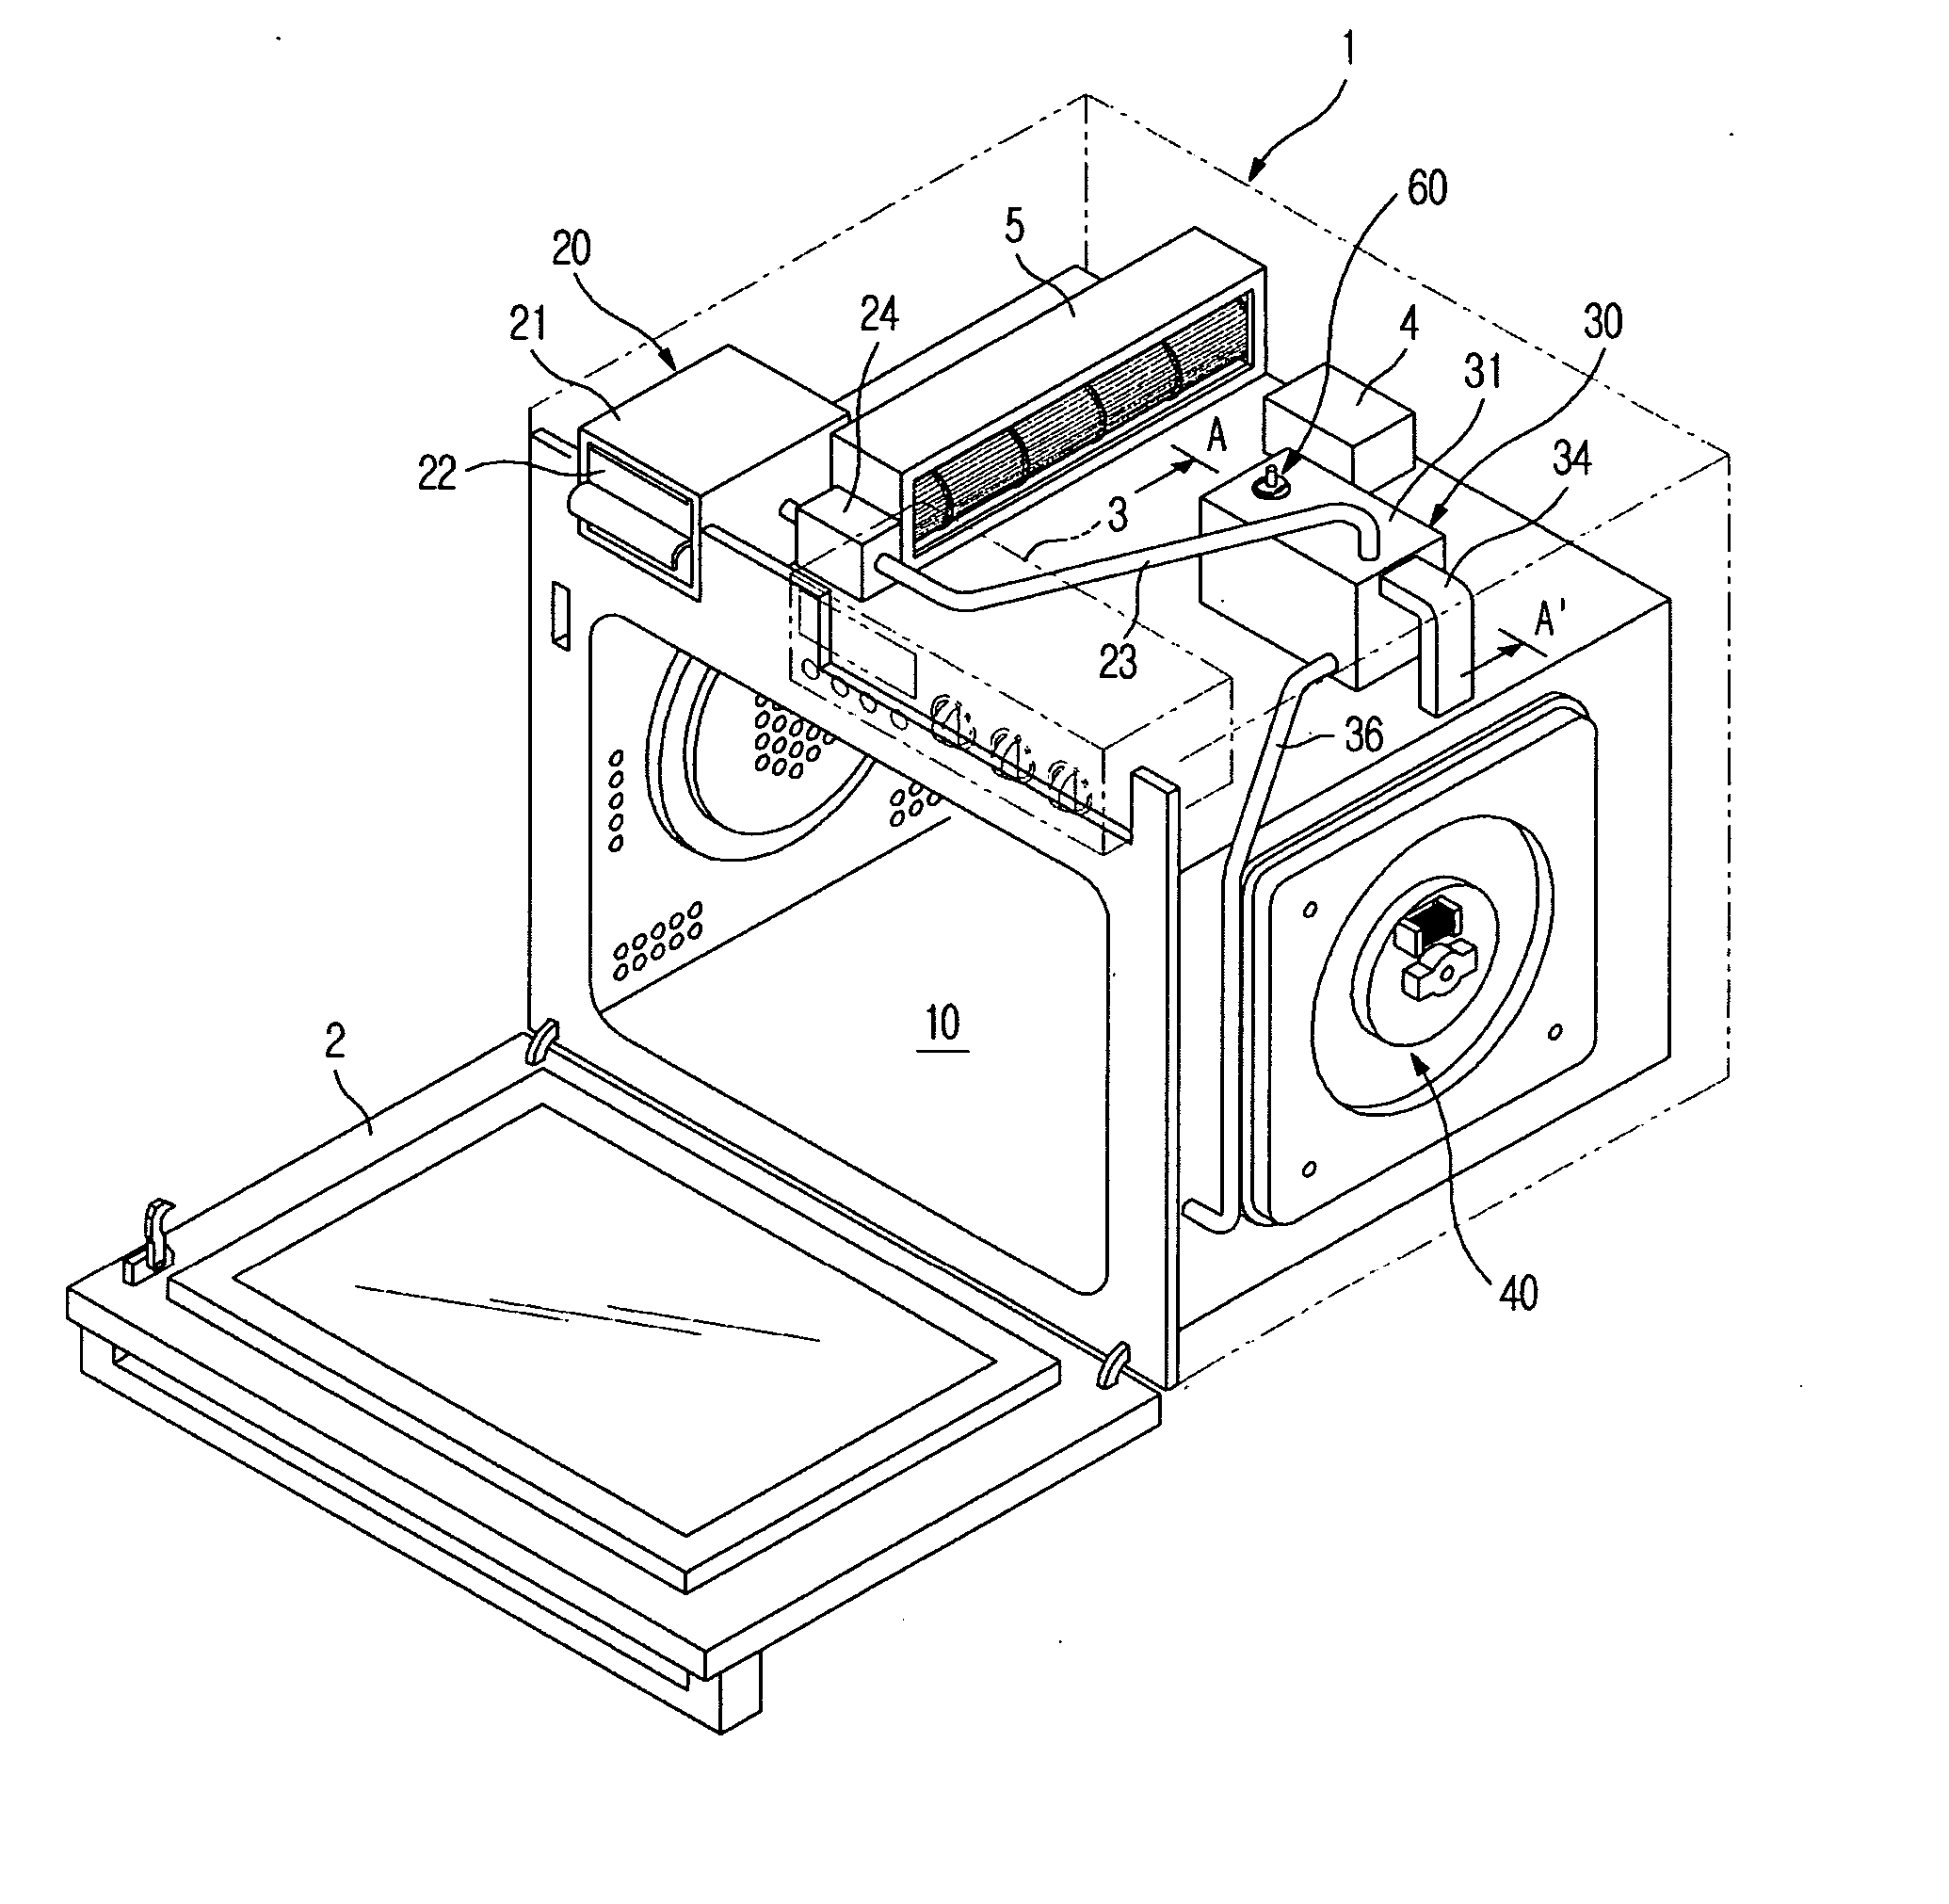 Steam cooking apparatus